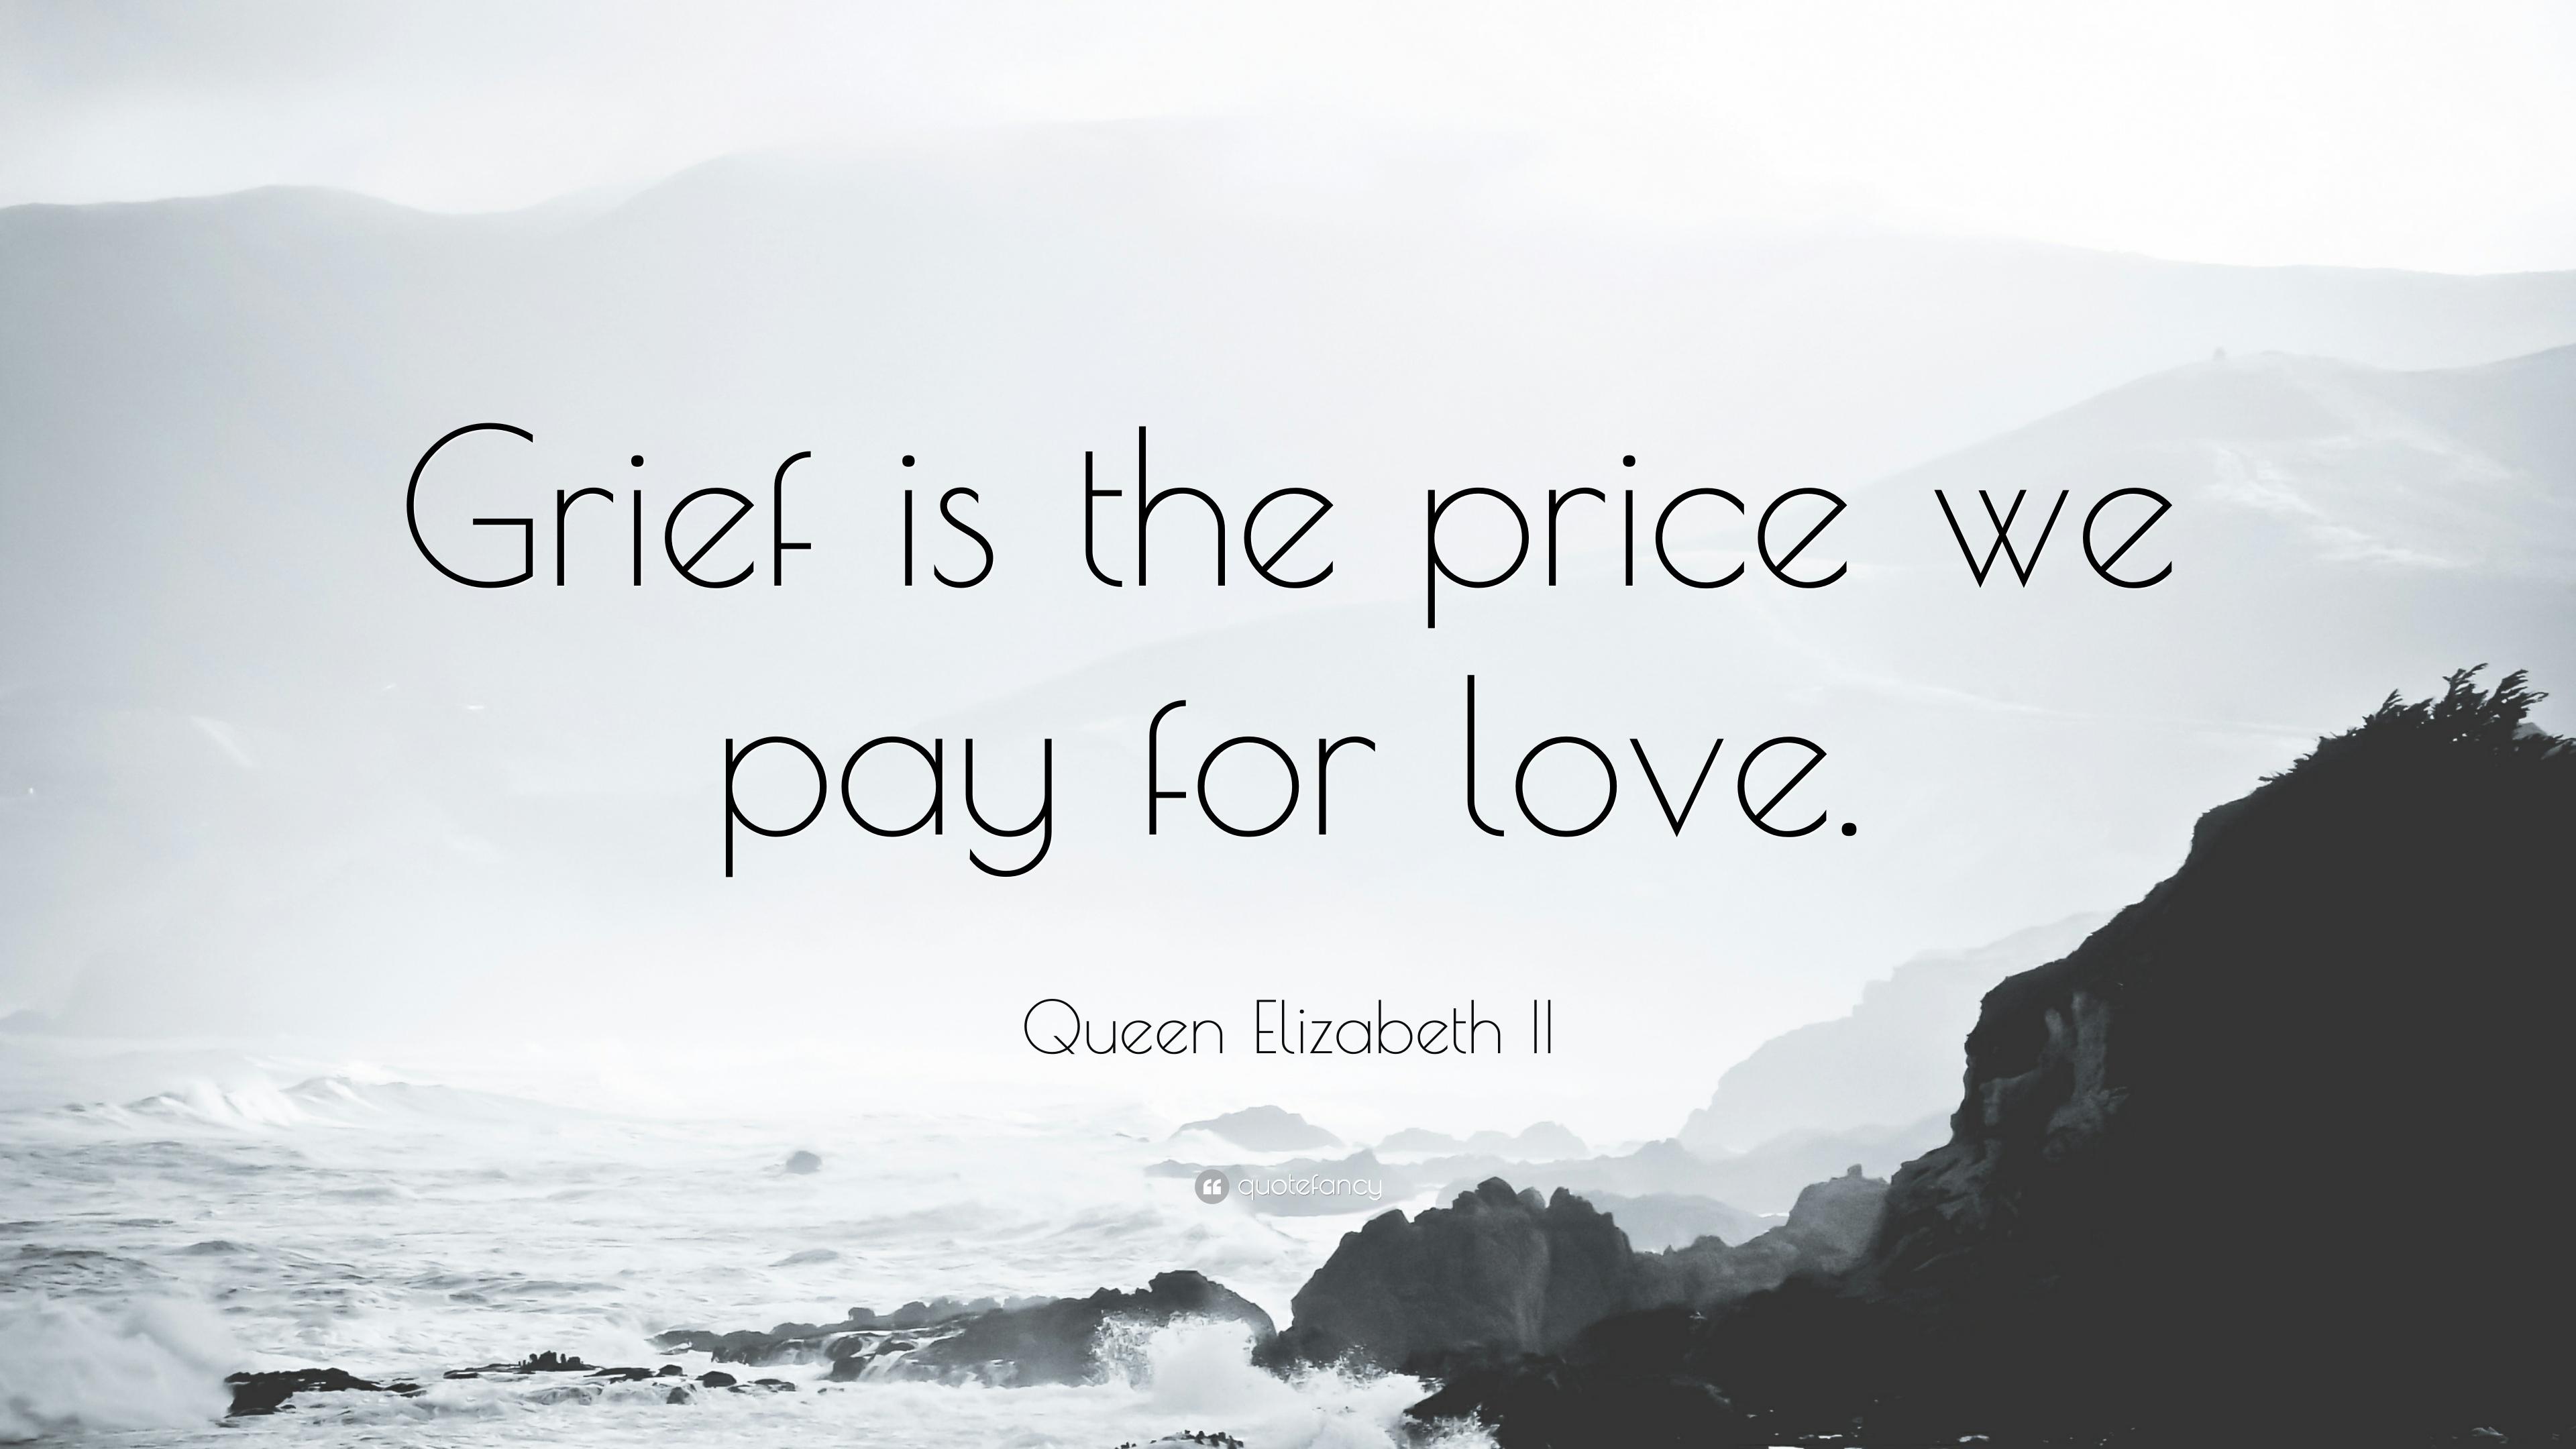 Queen Elizabeth II Quote: “Grief is the price we pay